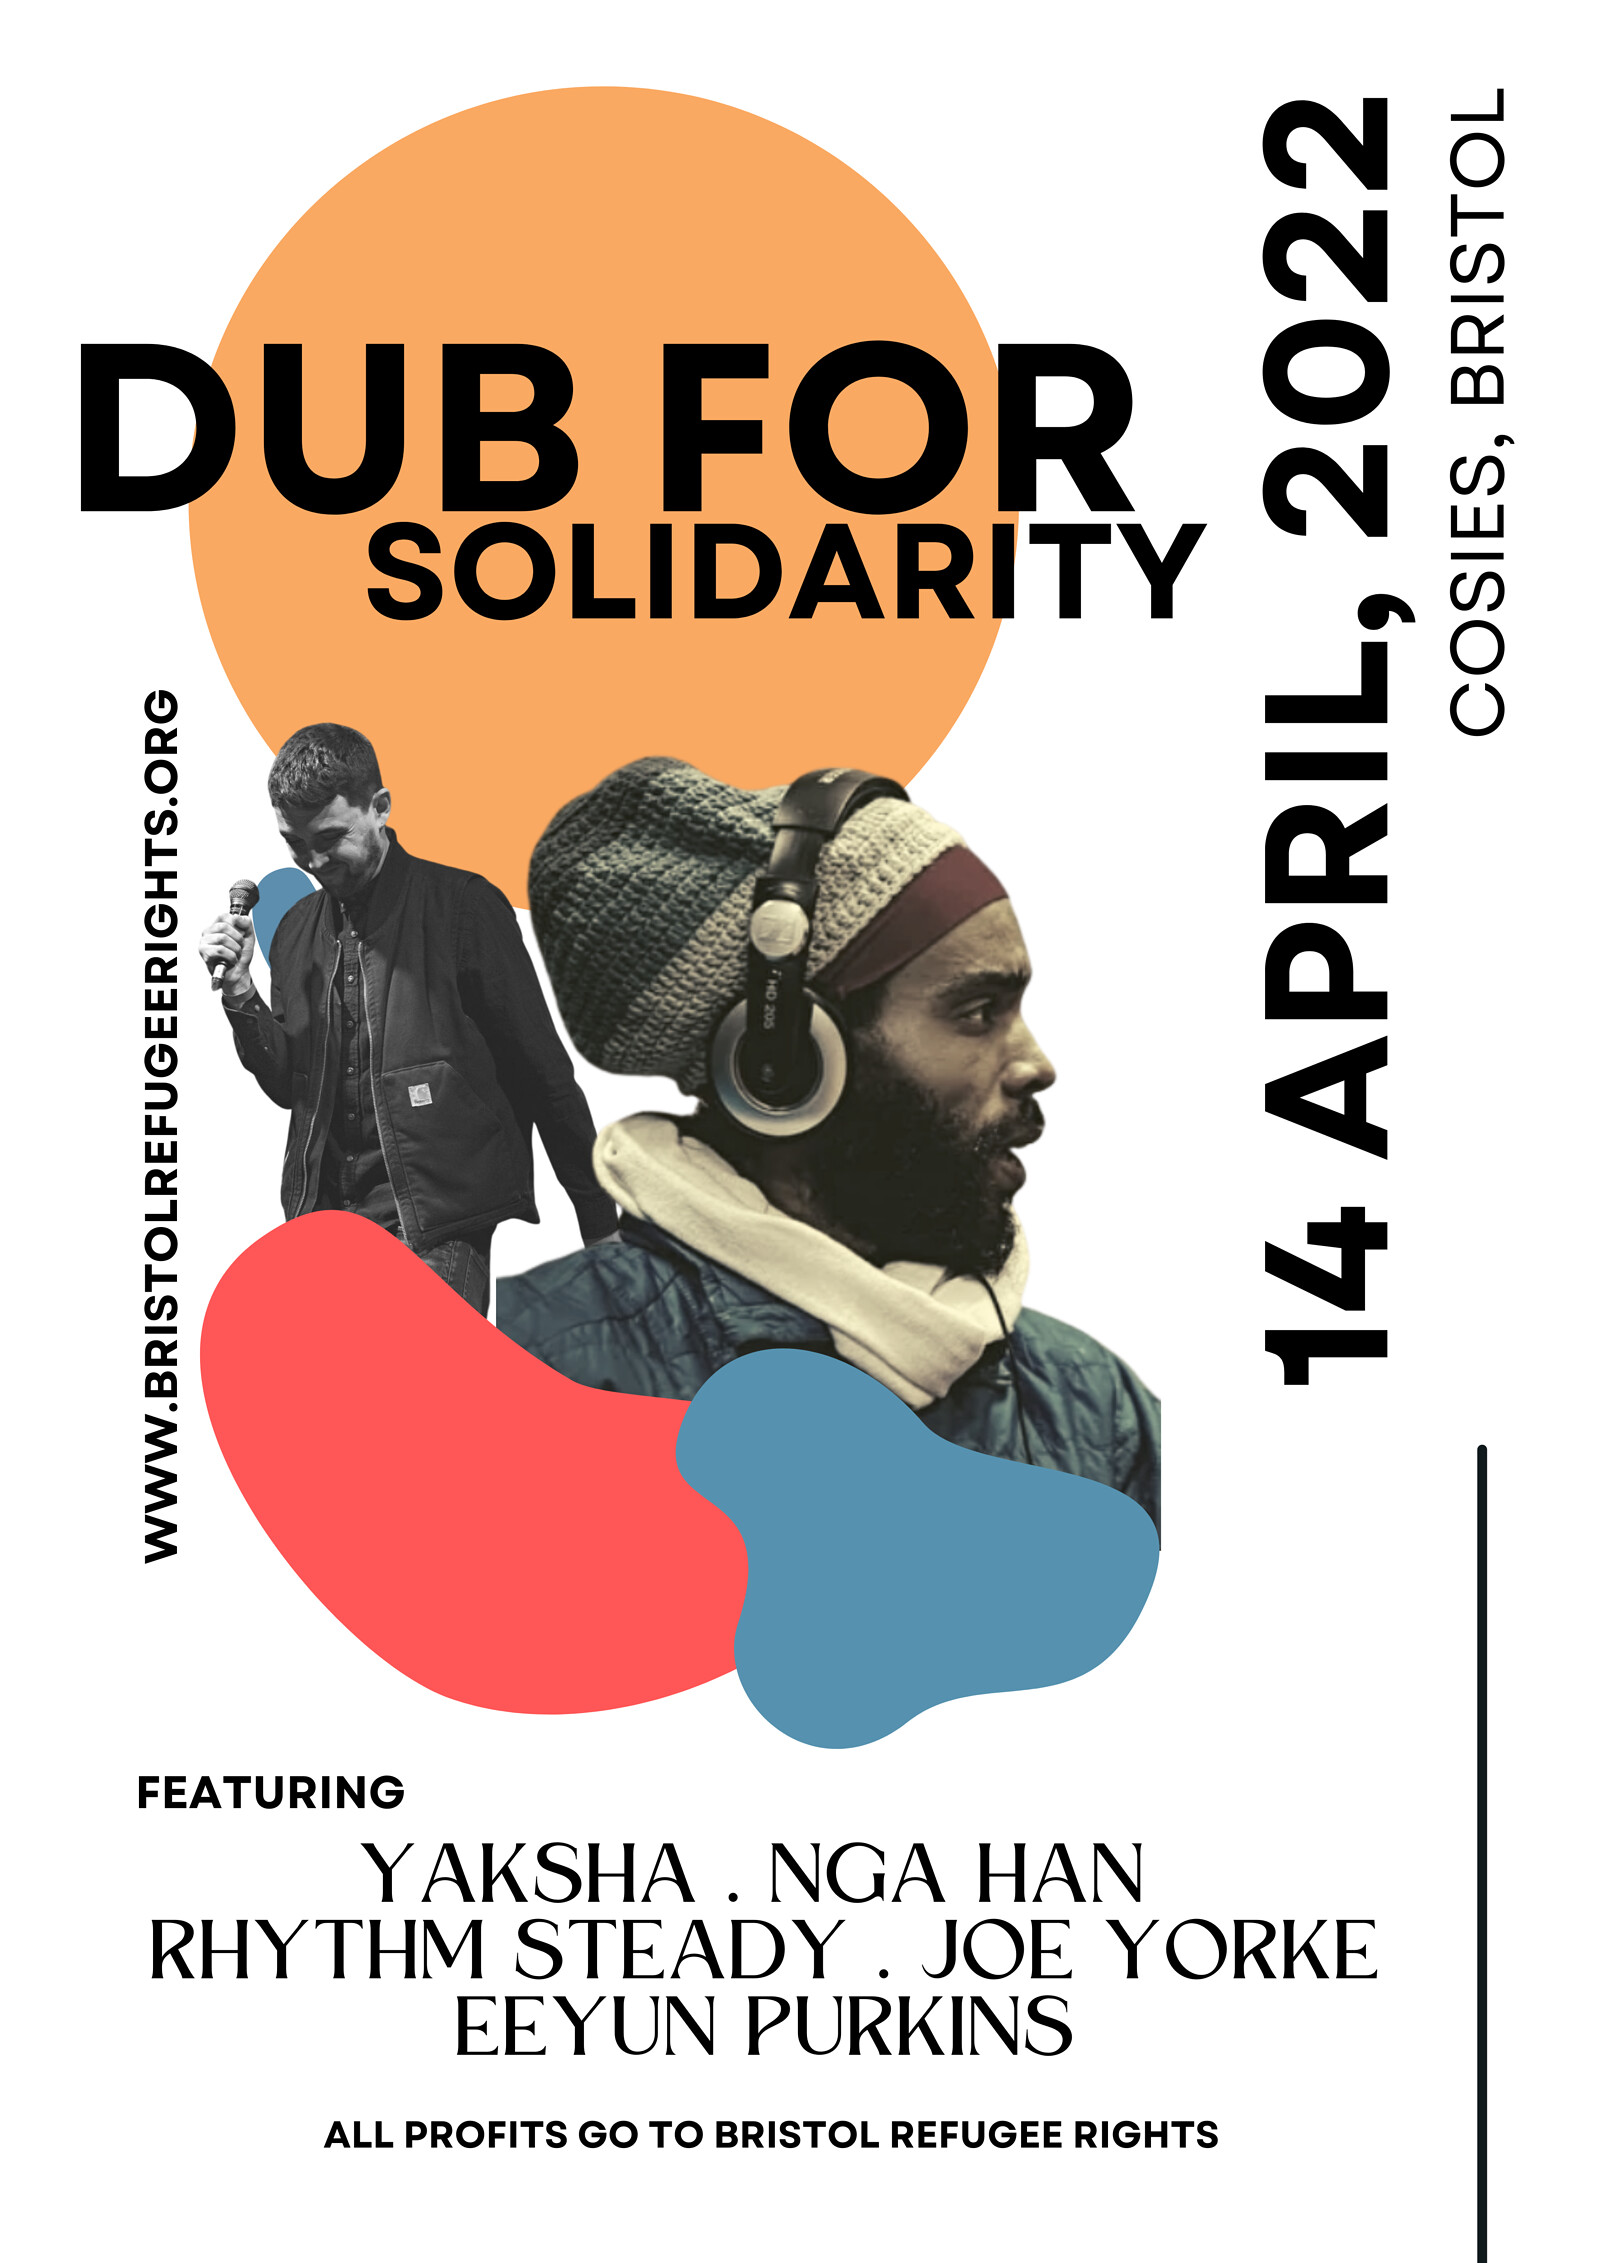 Rhythm Steady & Yaksha Sounds: Dub for Solidarity at Cosies